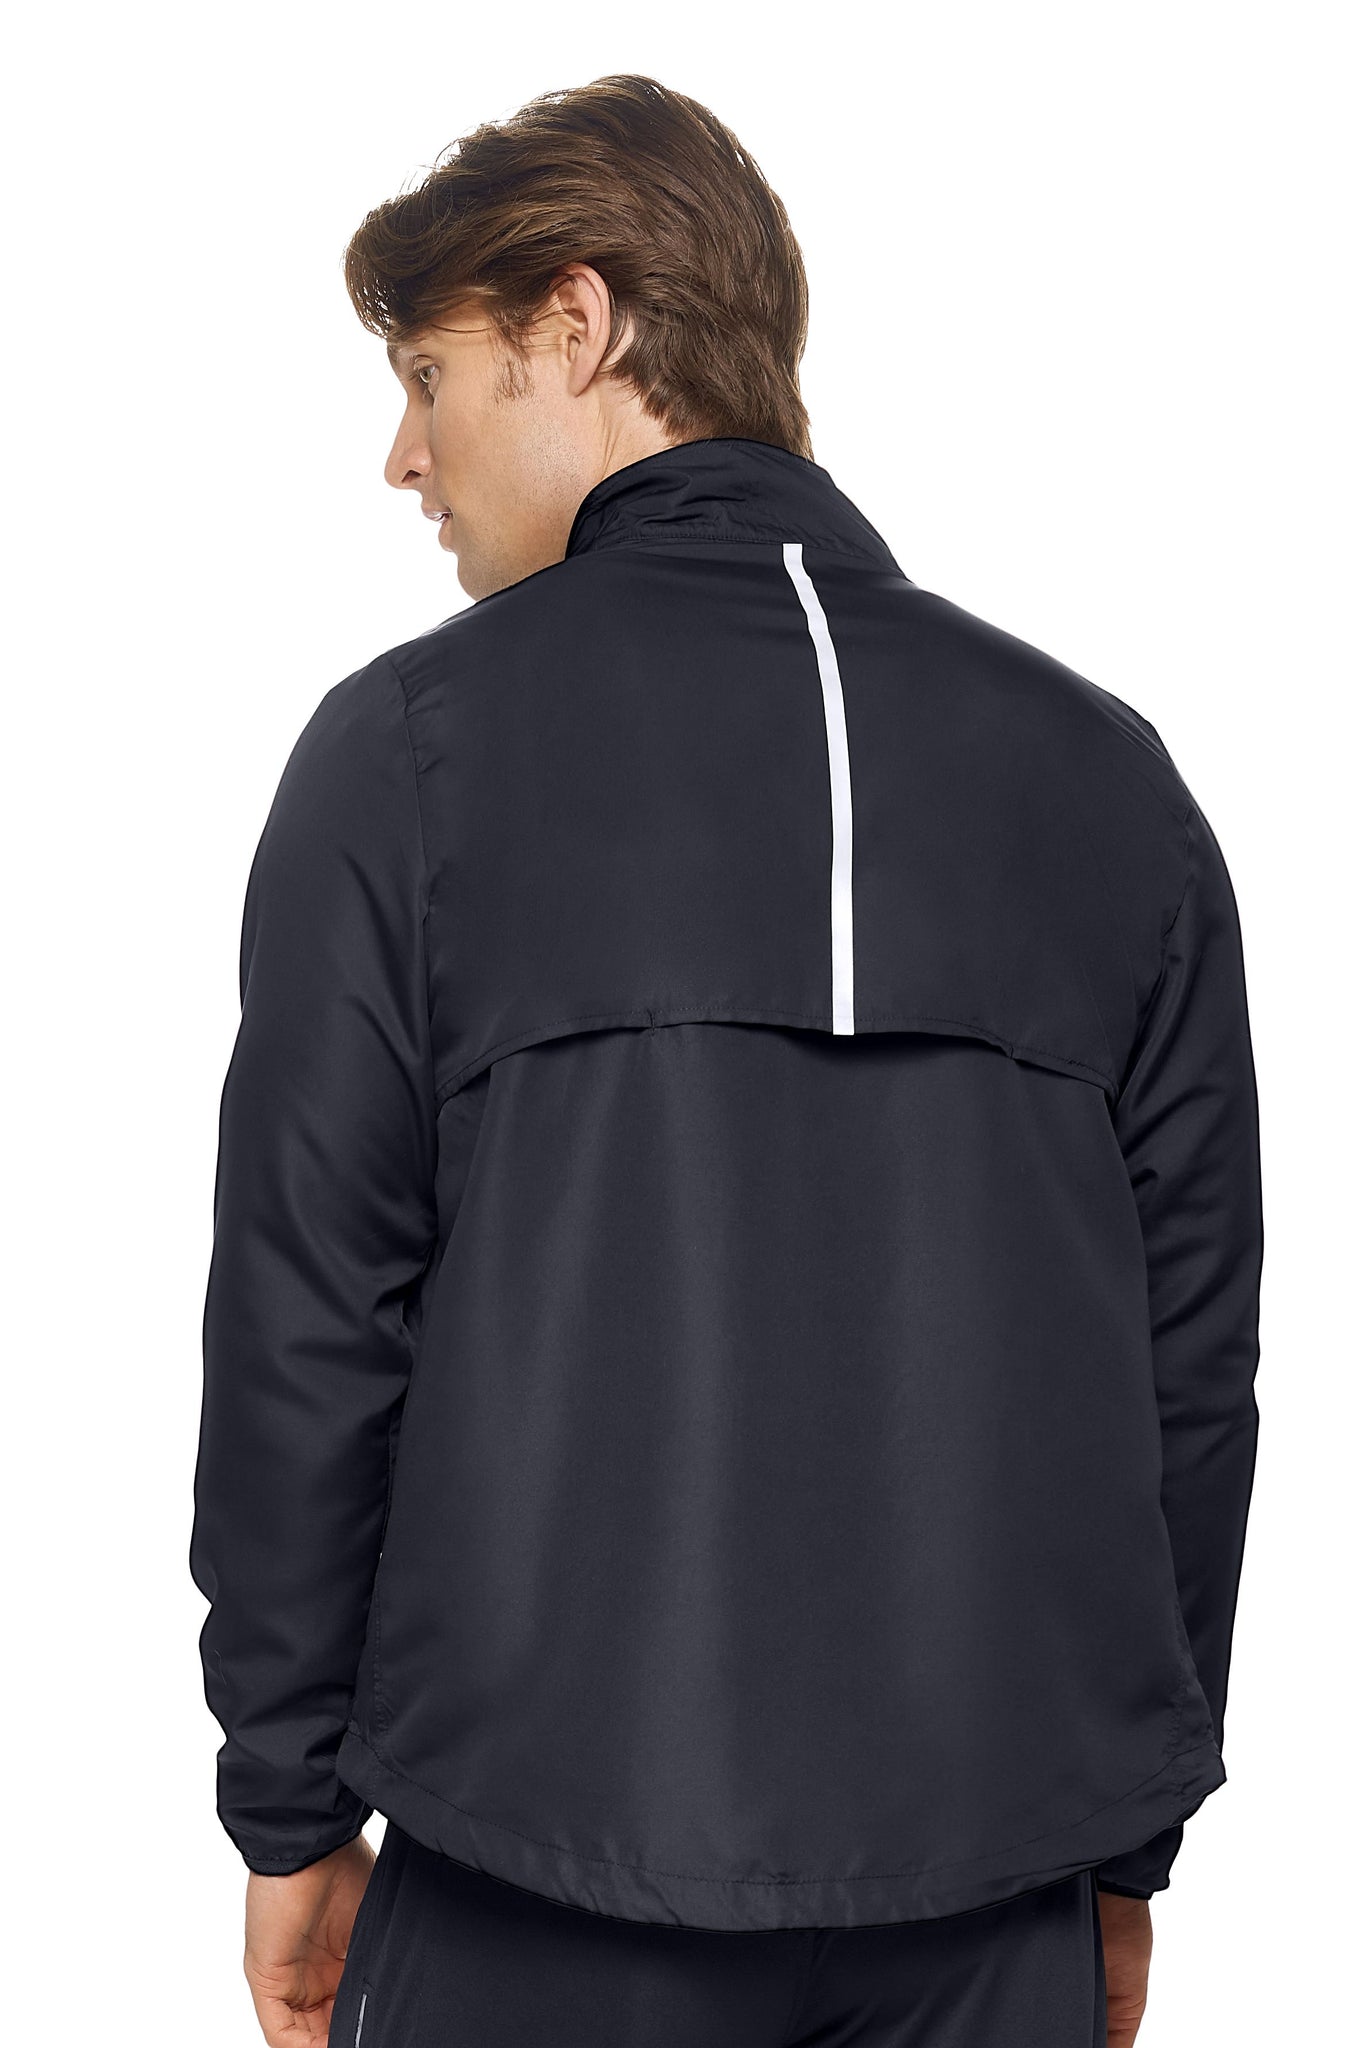 Expert Brand Wholesale Men's Water Resistant Run Away Jacket in black image 4#black